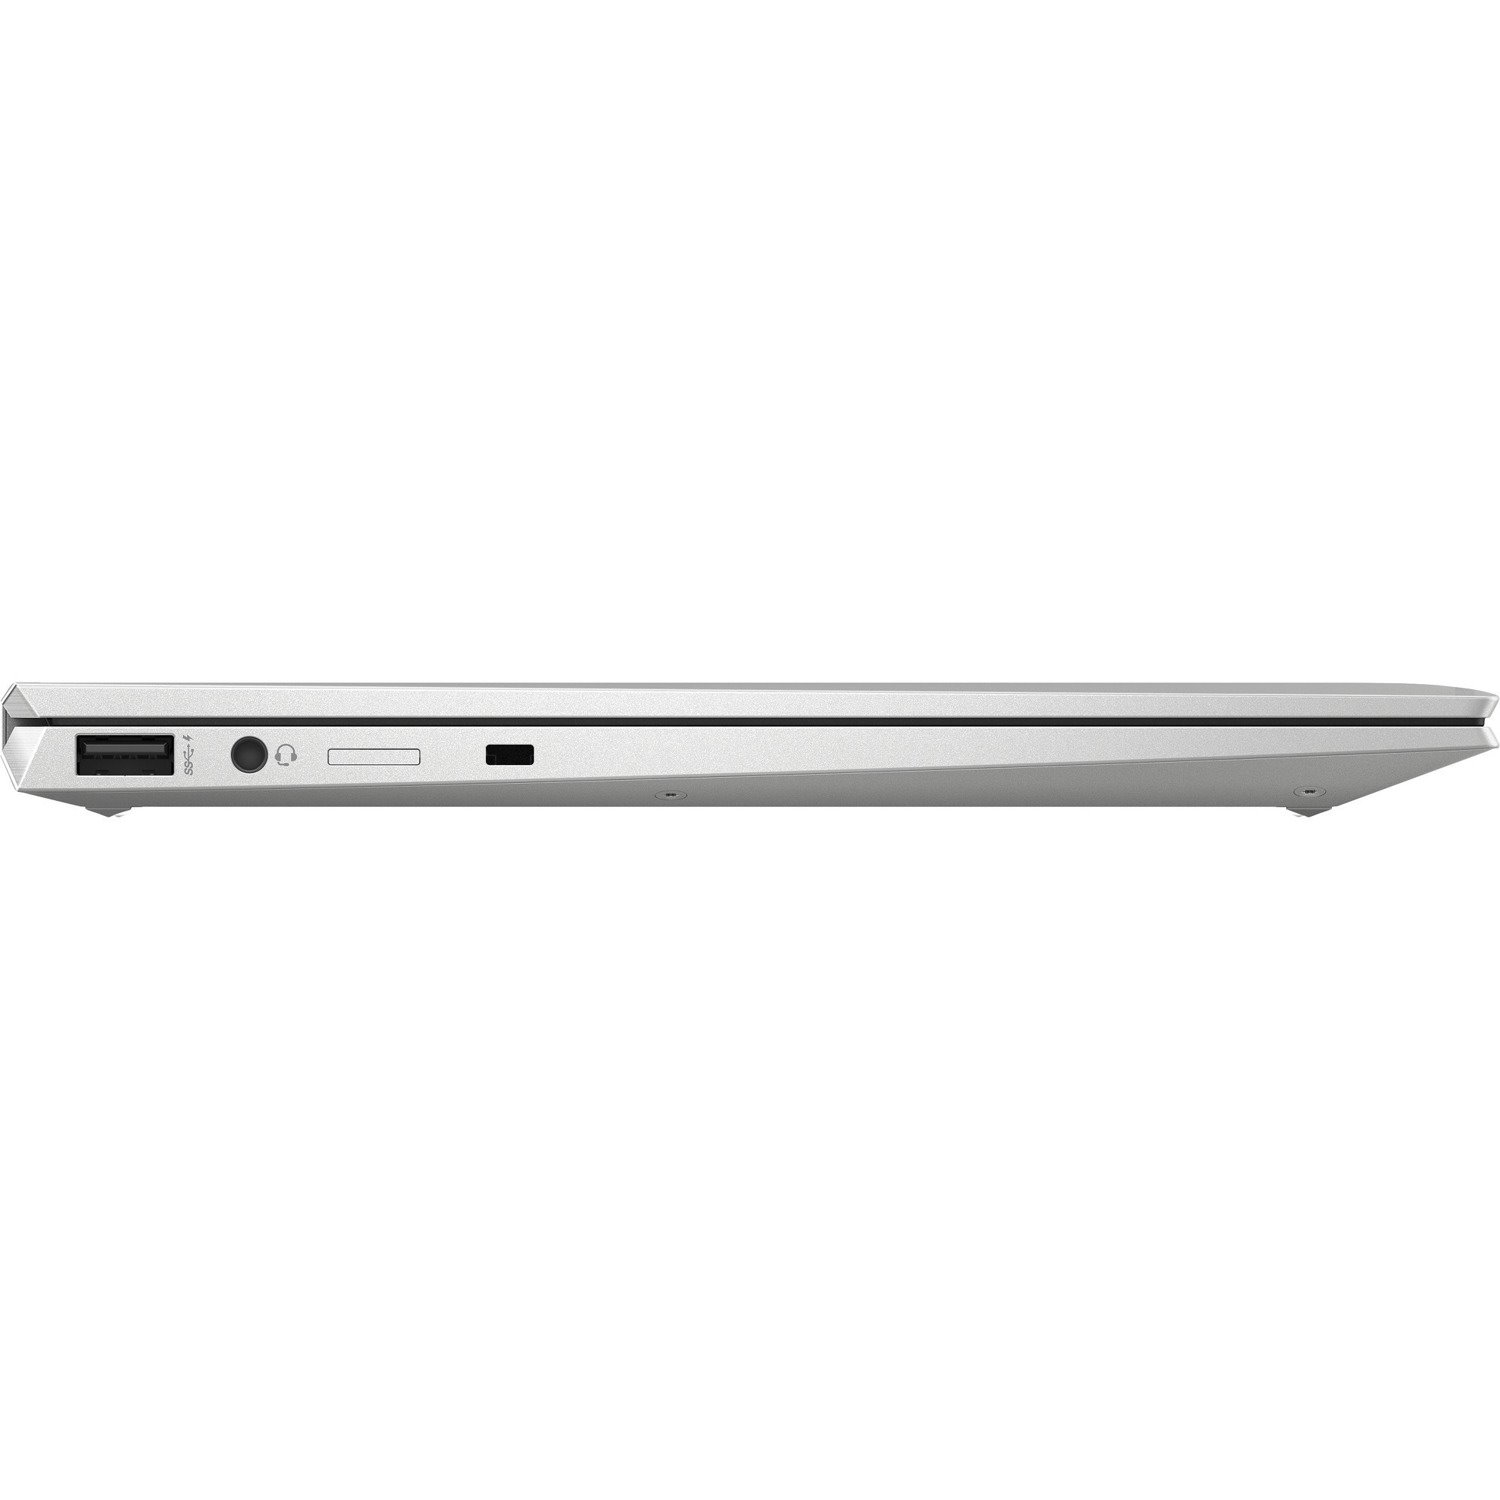 HP EliteBook x360 1040 G7 14" Touchscreen Convertible 2 in 1 Notebook - Intel Core i5 10th Gen i5-10210U - 8 GB - 256 GB SSD